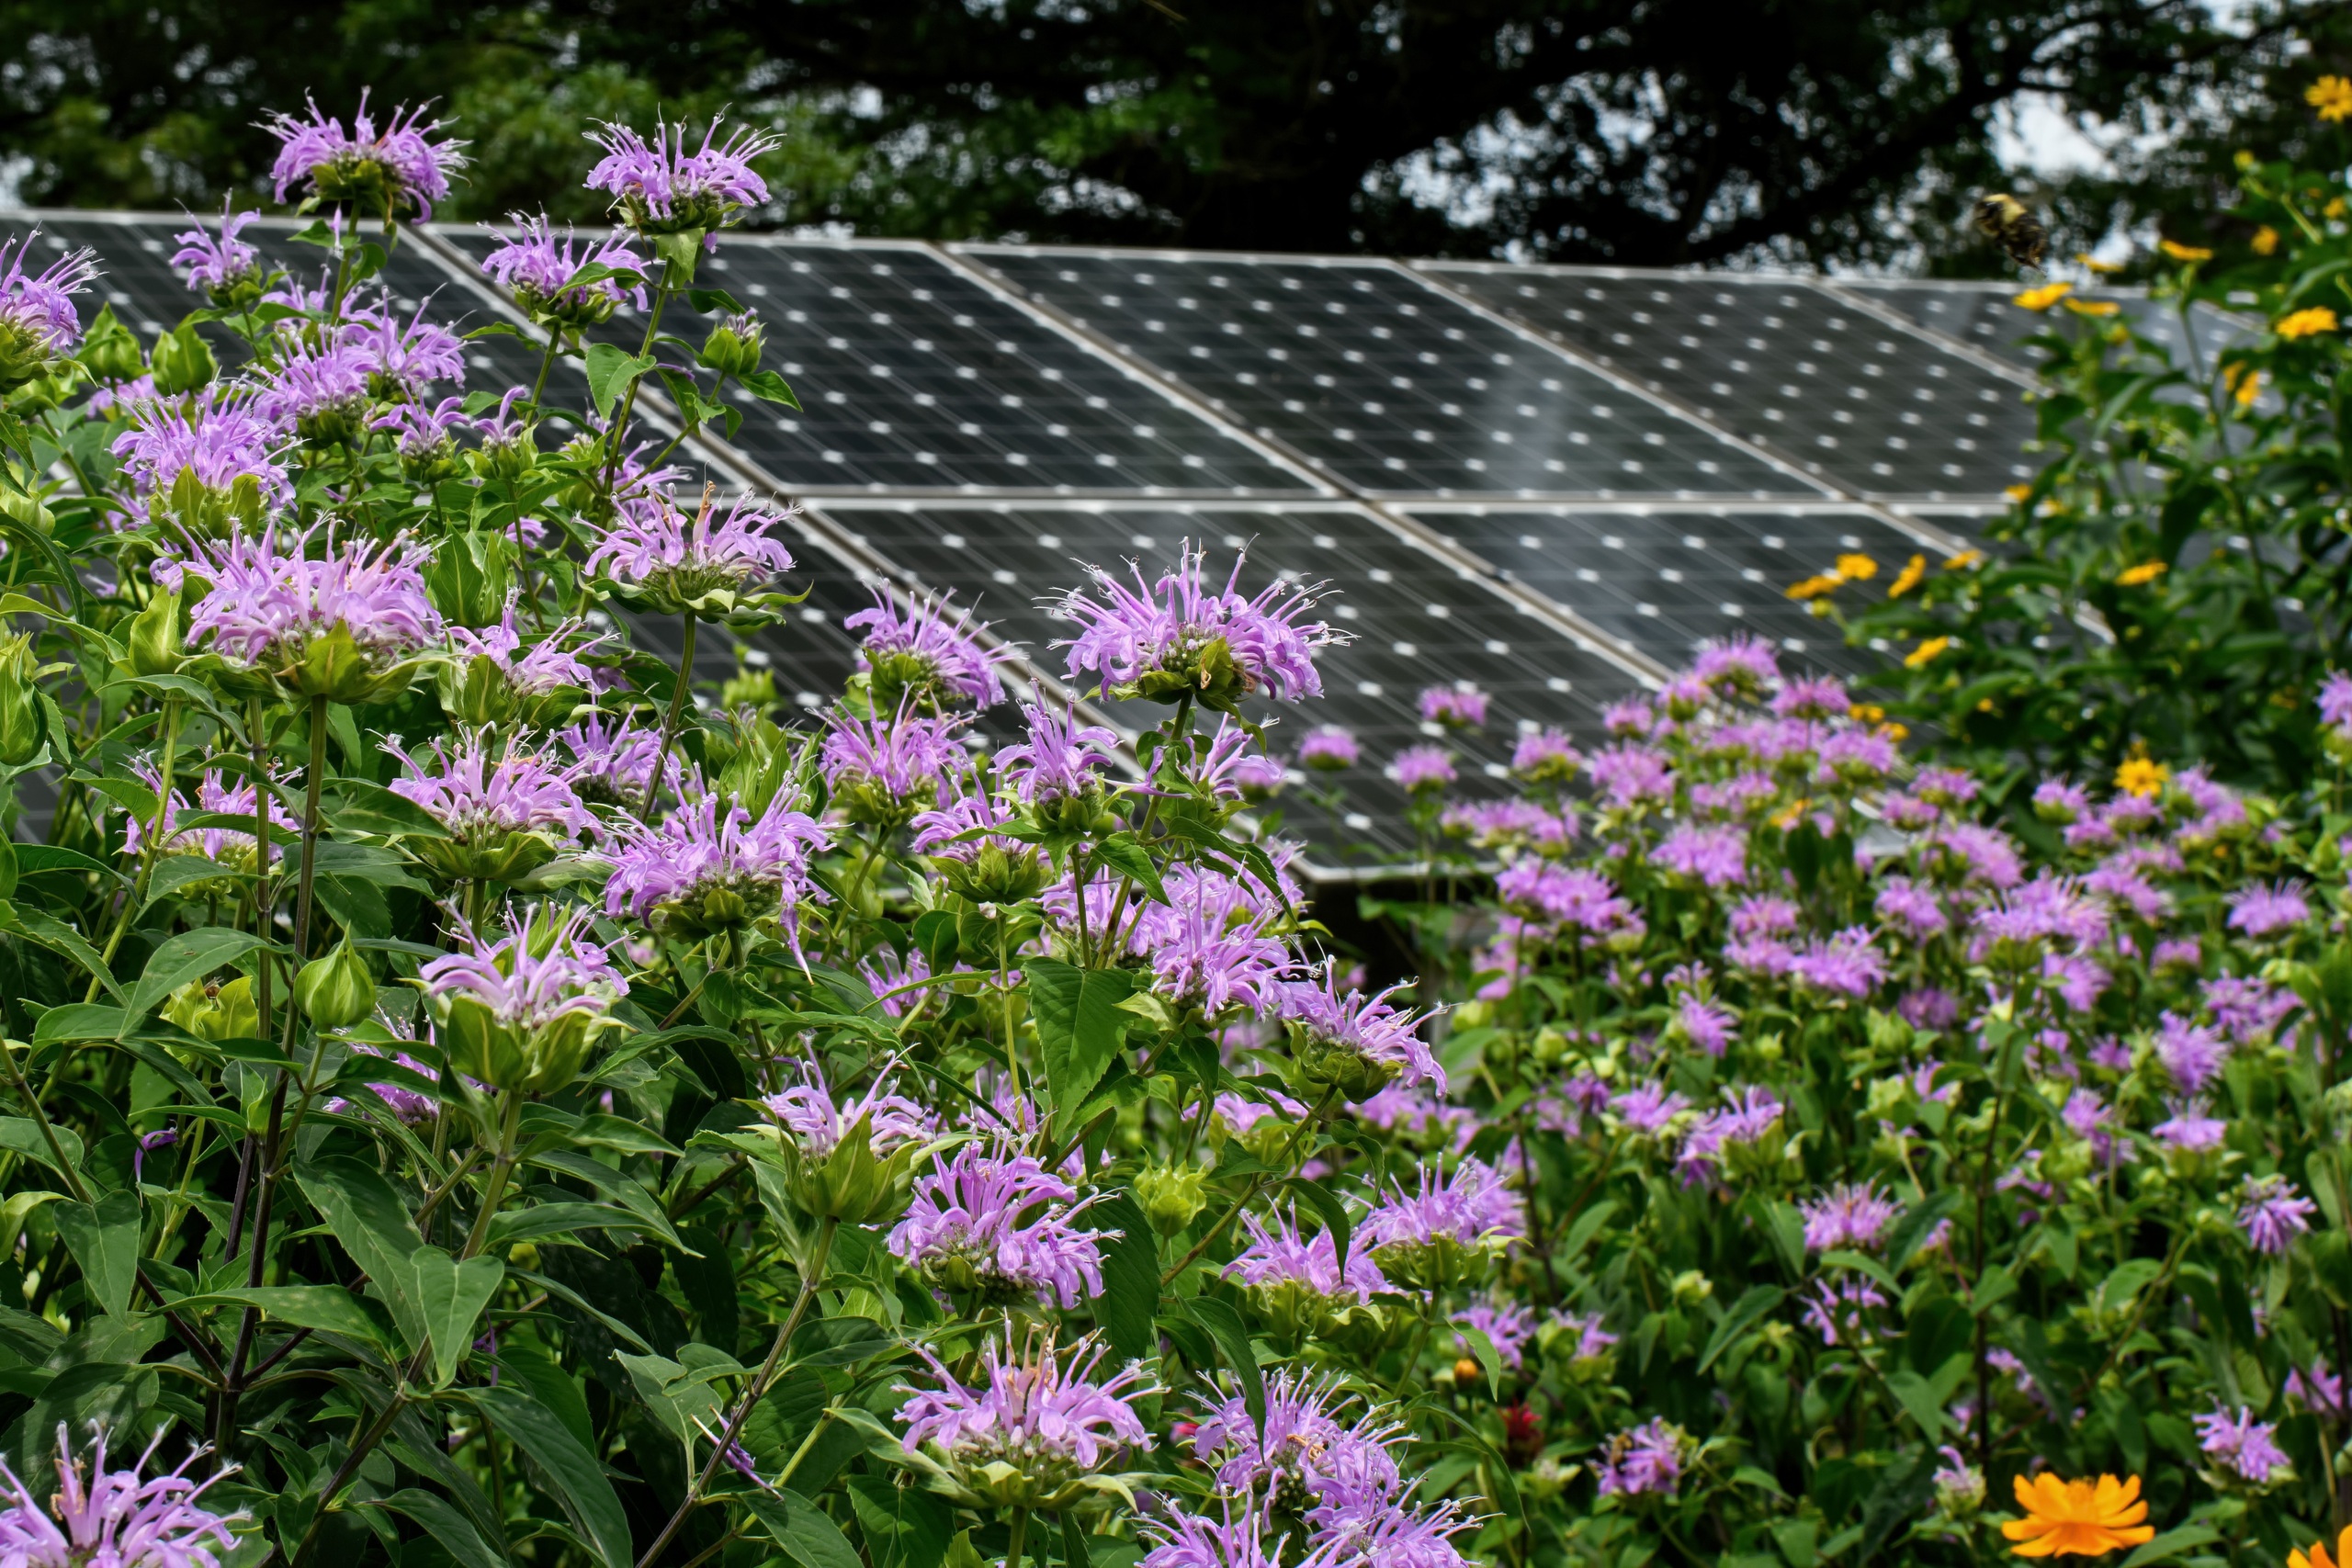 solar panels in a pollinator garden